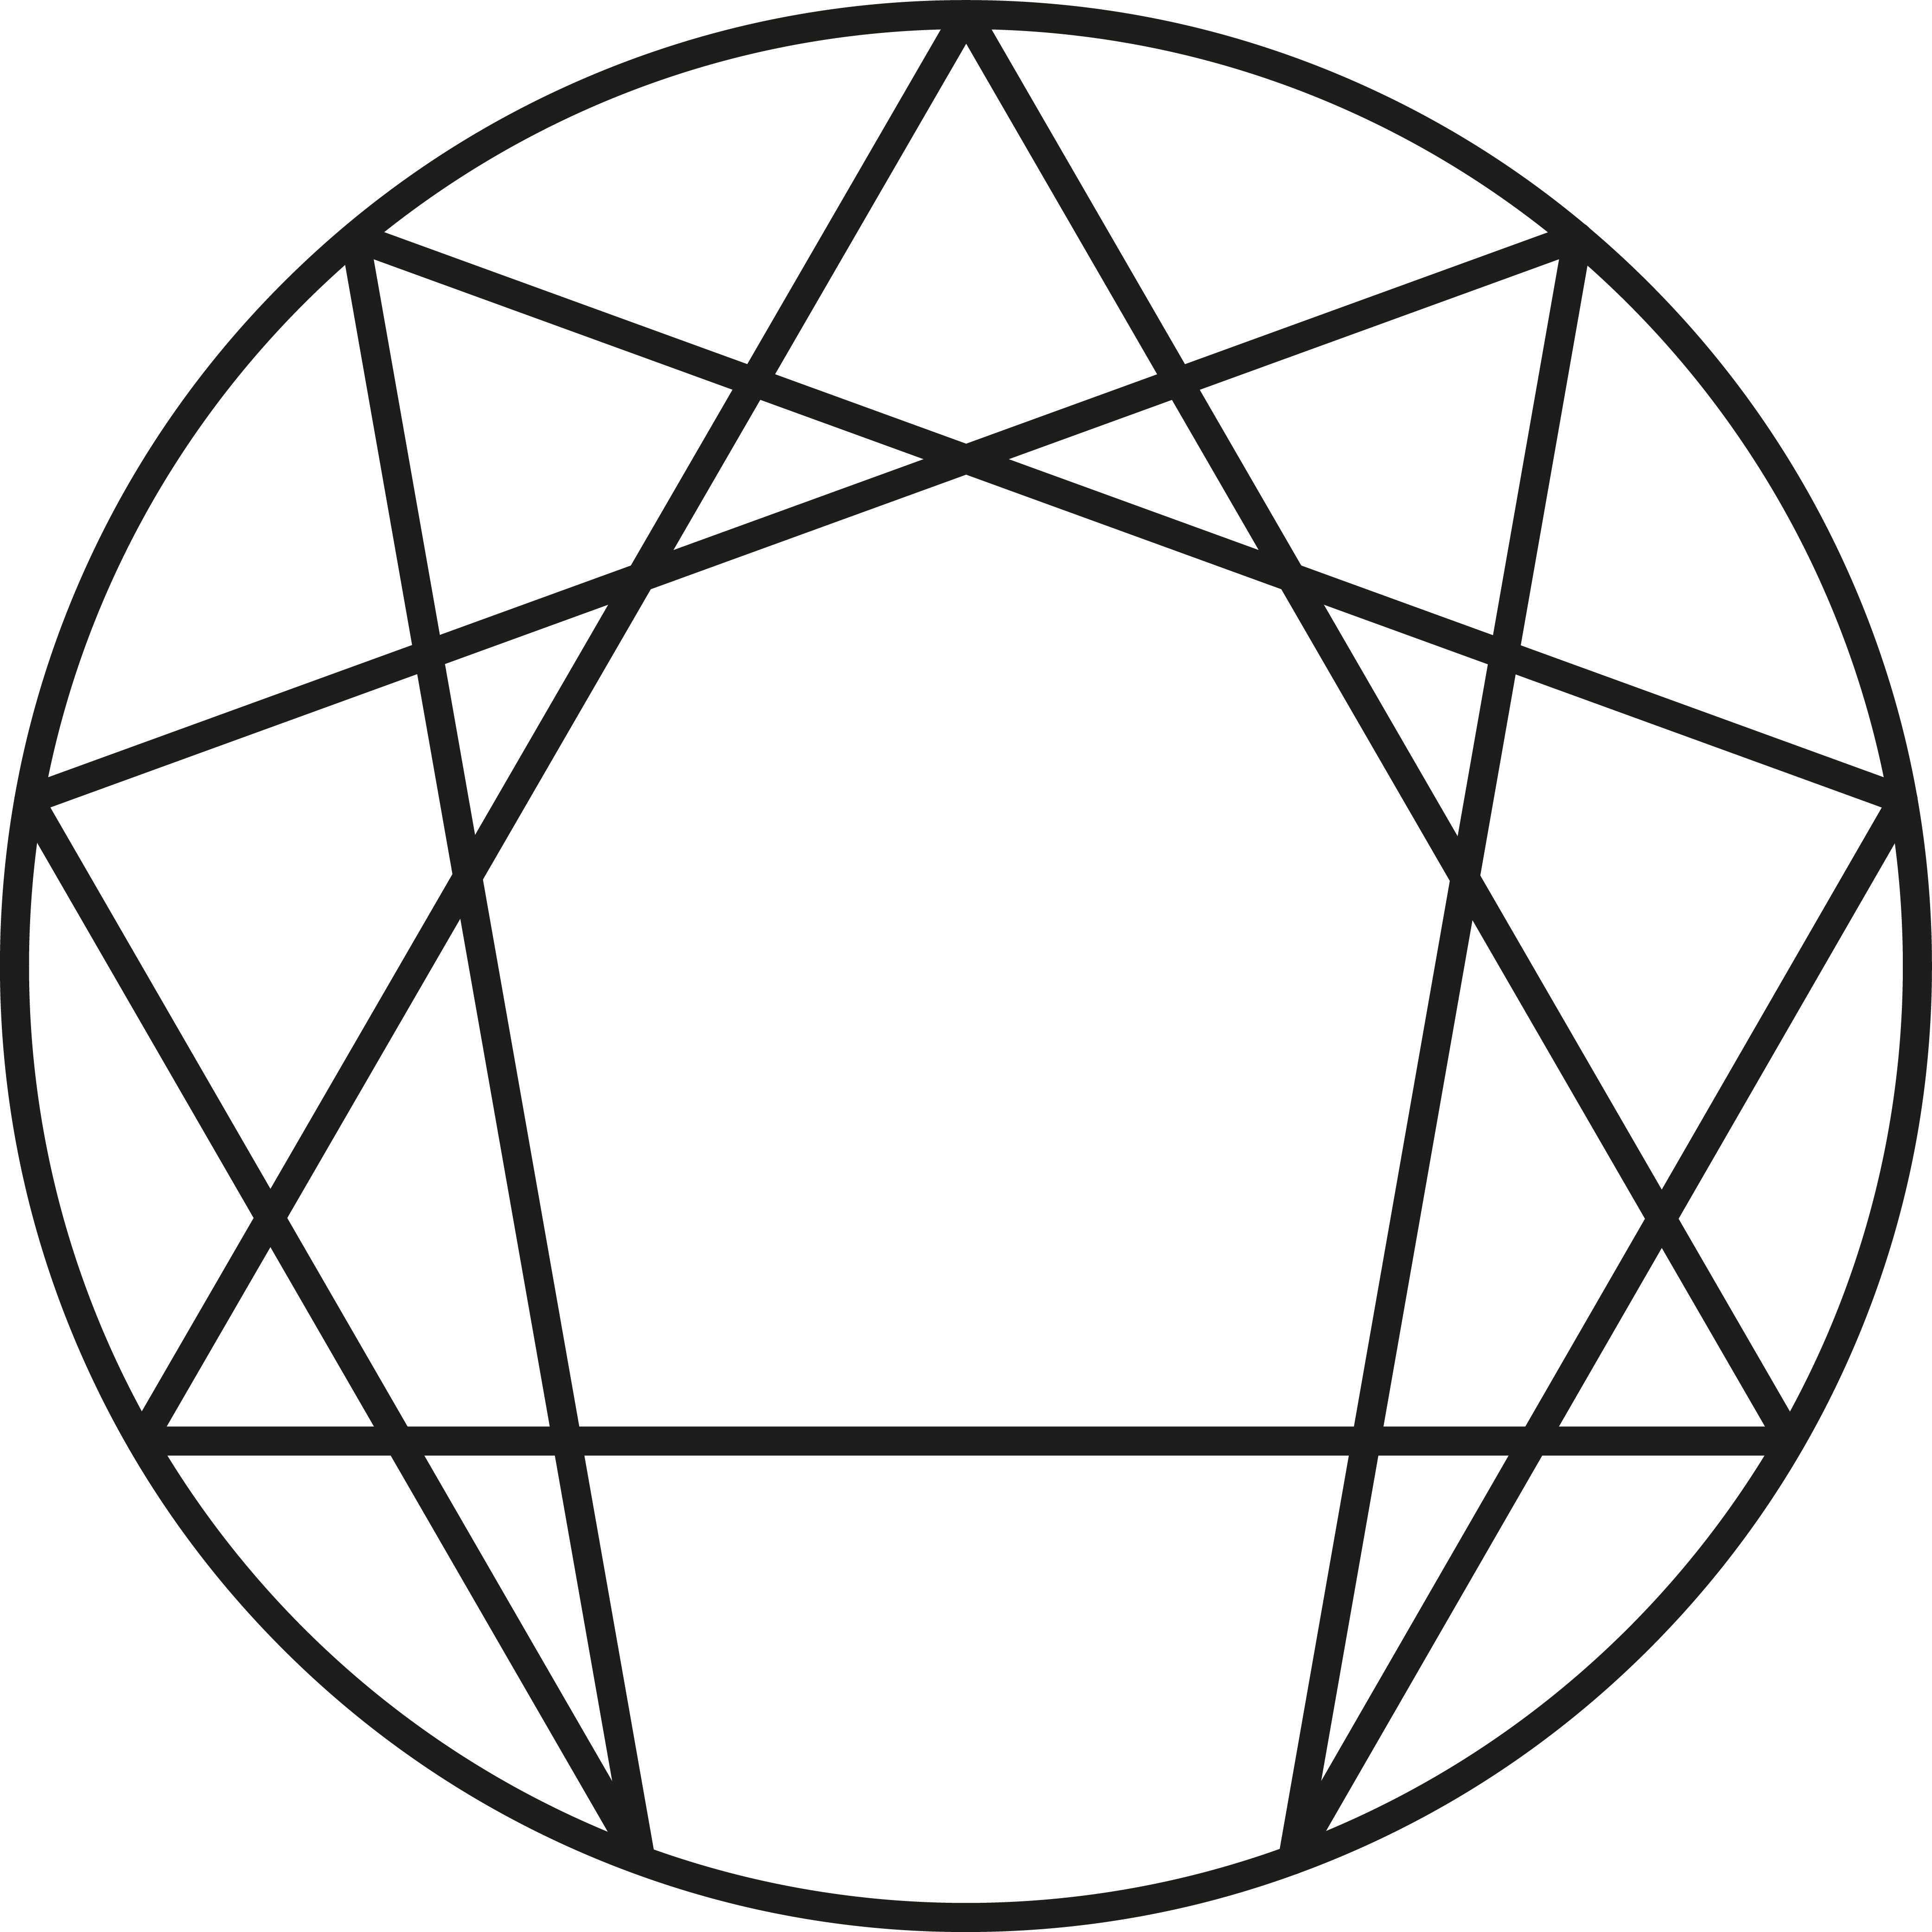 Enneagramm as the symbol of the Gurdjieff Work